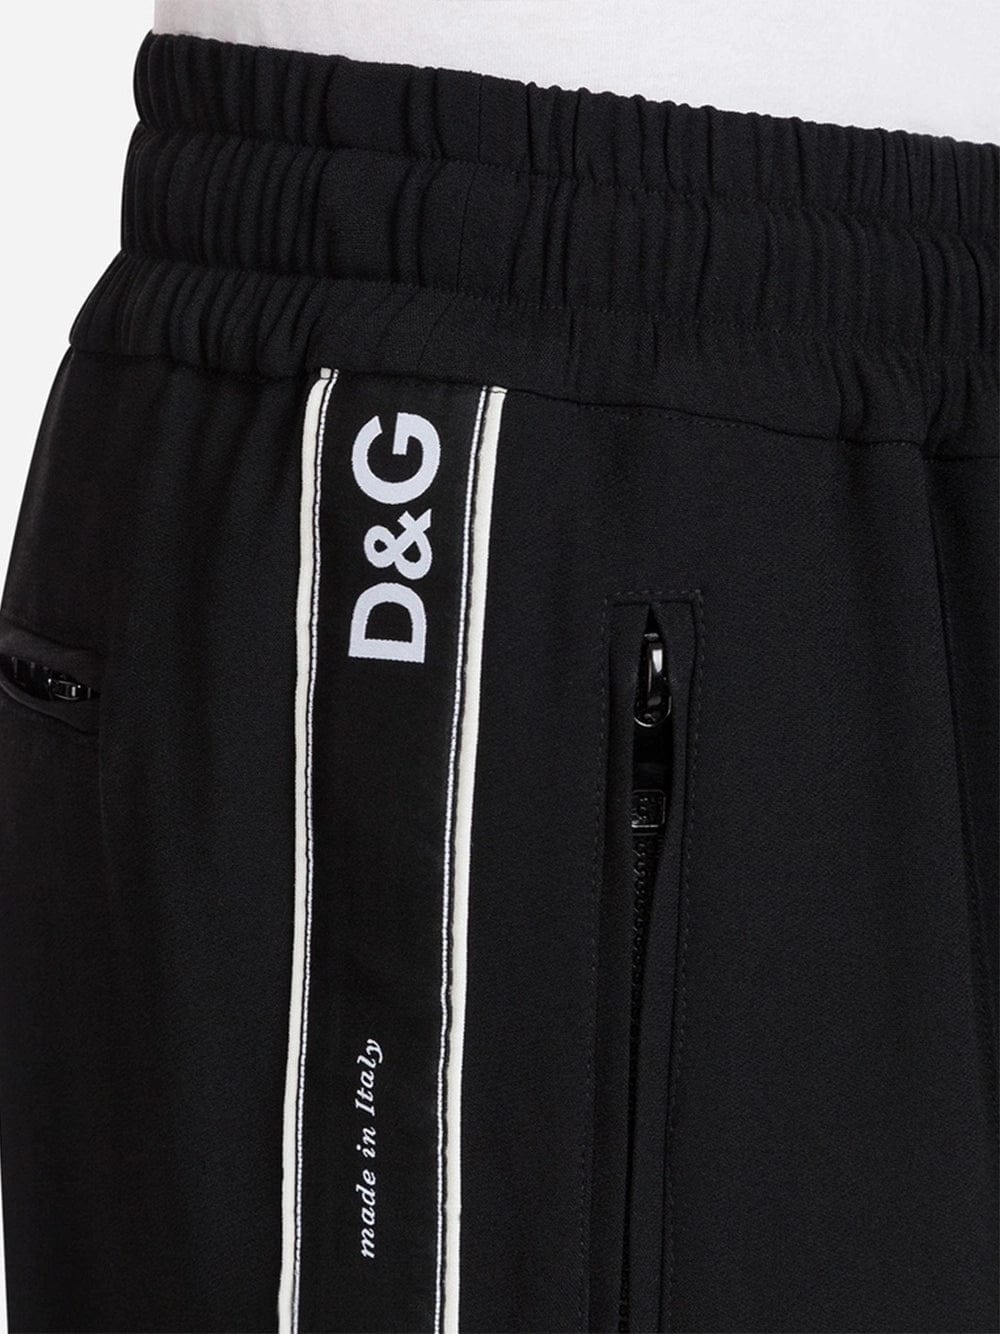 Dolce & Gabbana Men's Pants and Shorts - Black - Sweatpants